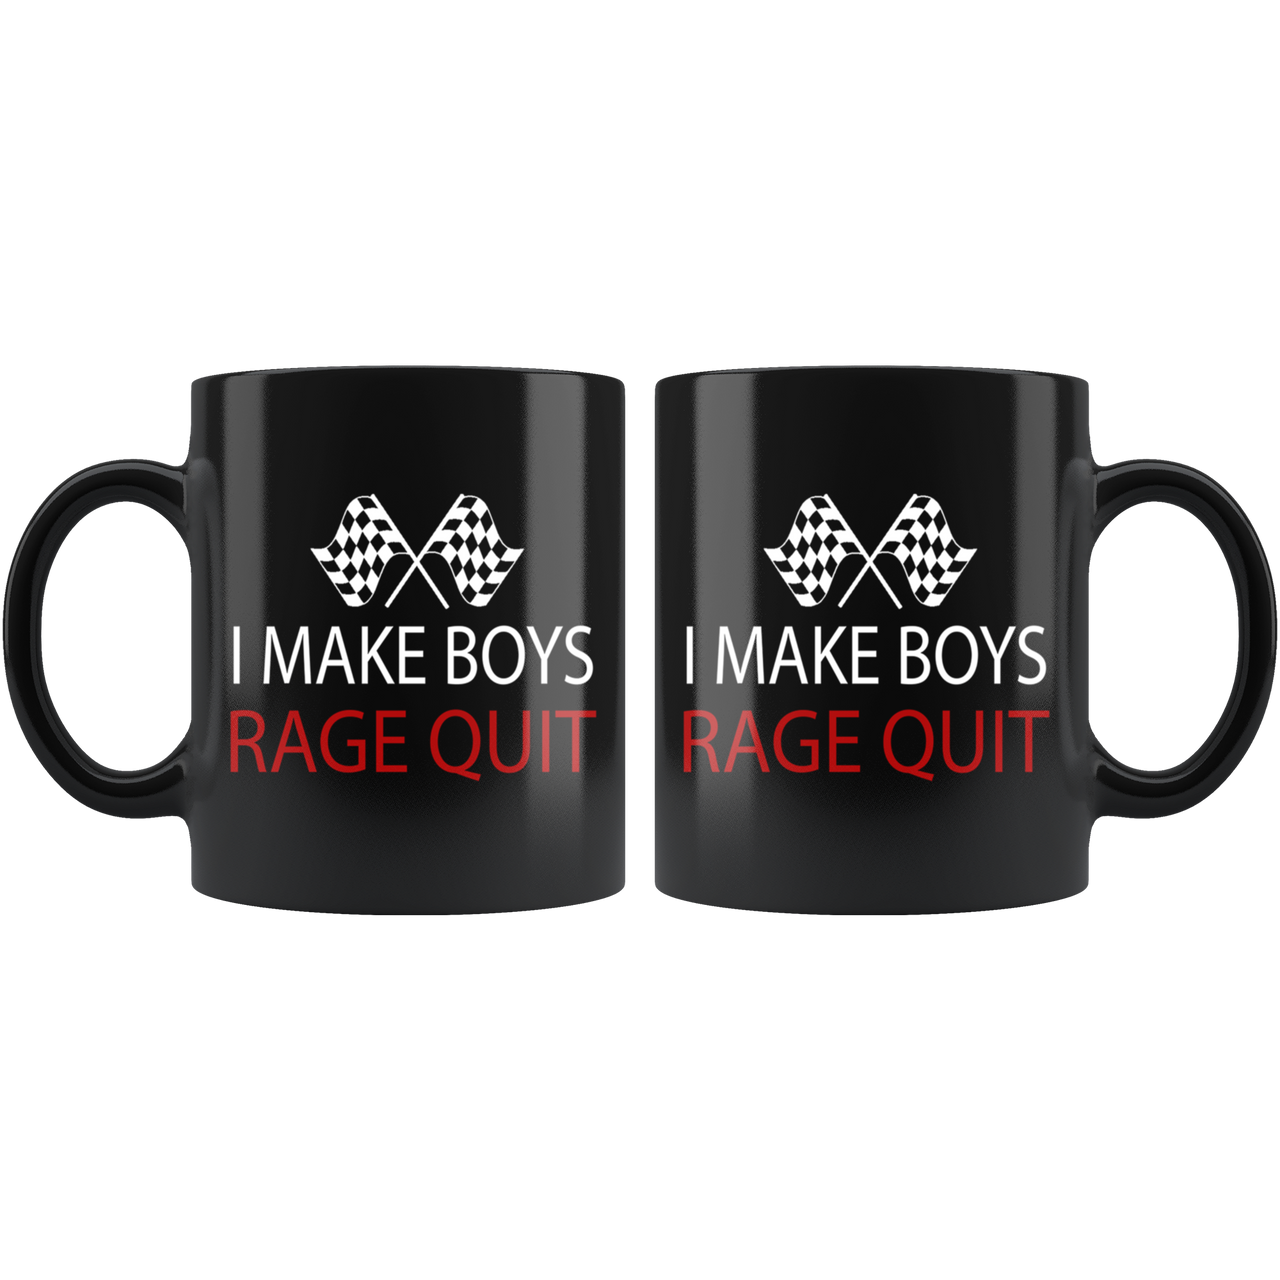 I Make Boys Rage Quit Mug!